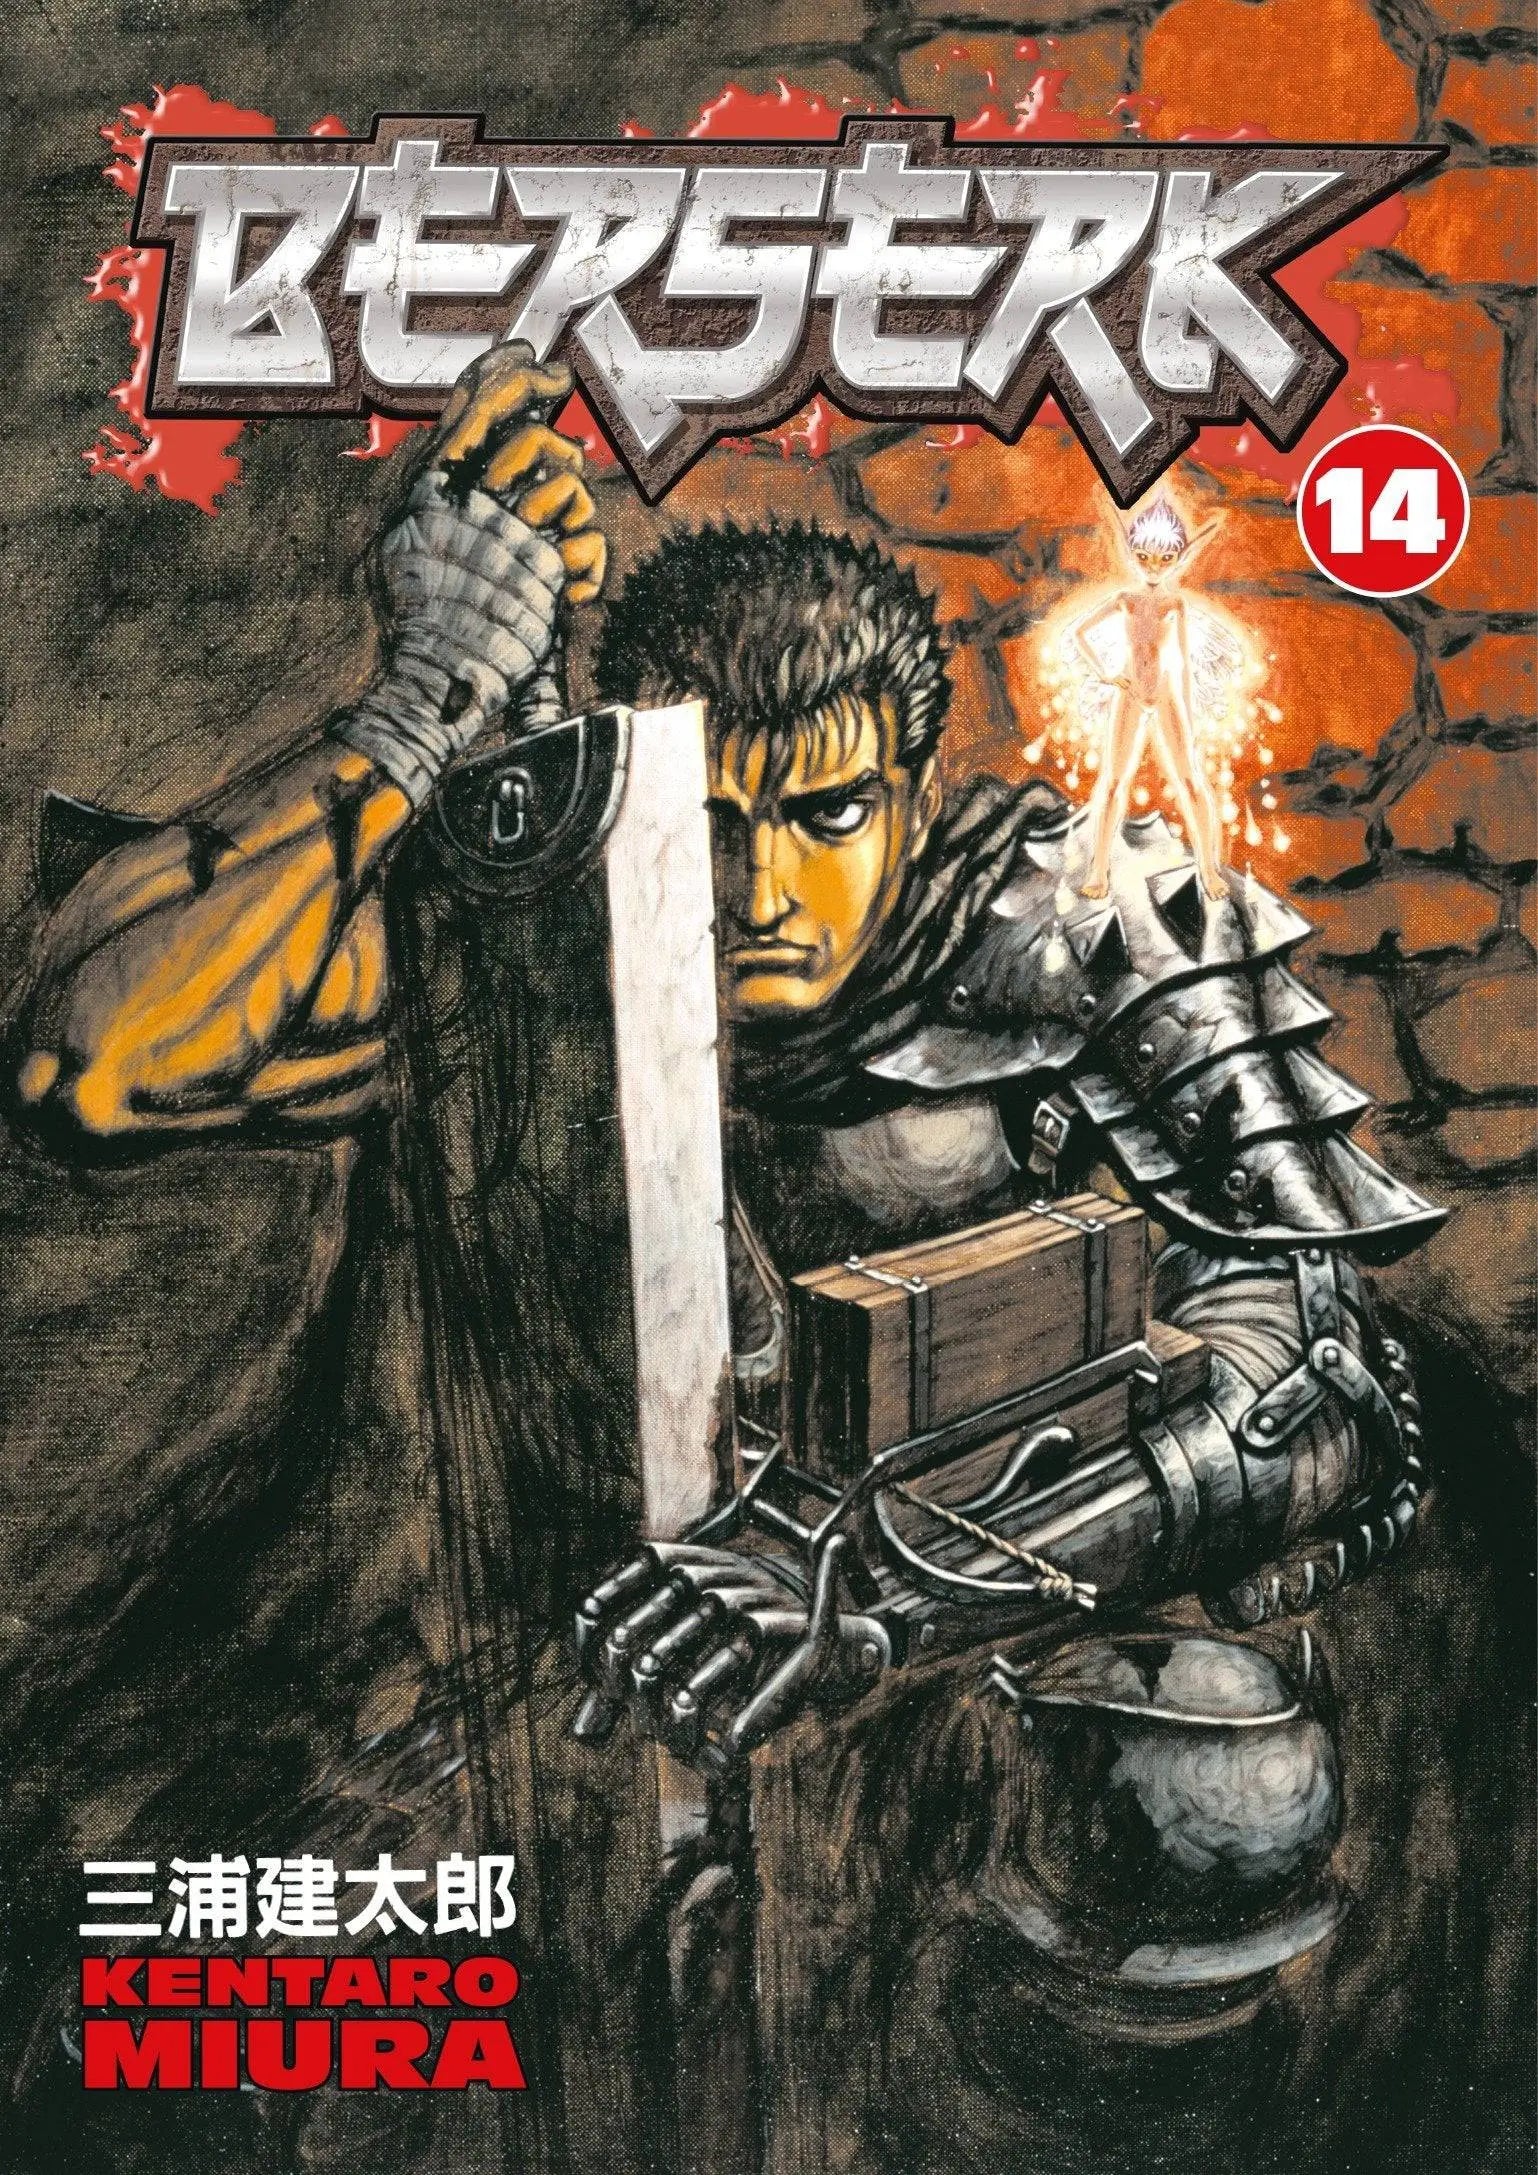 Berserk Volume 14 Paperback  Illustrated, Dec 19 2006 King Gaming